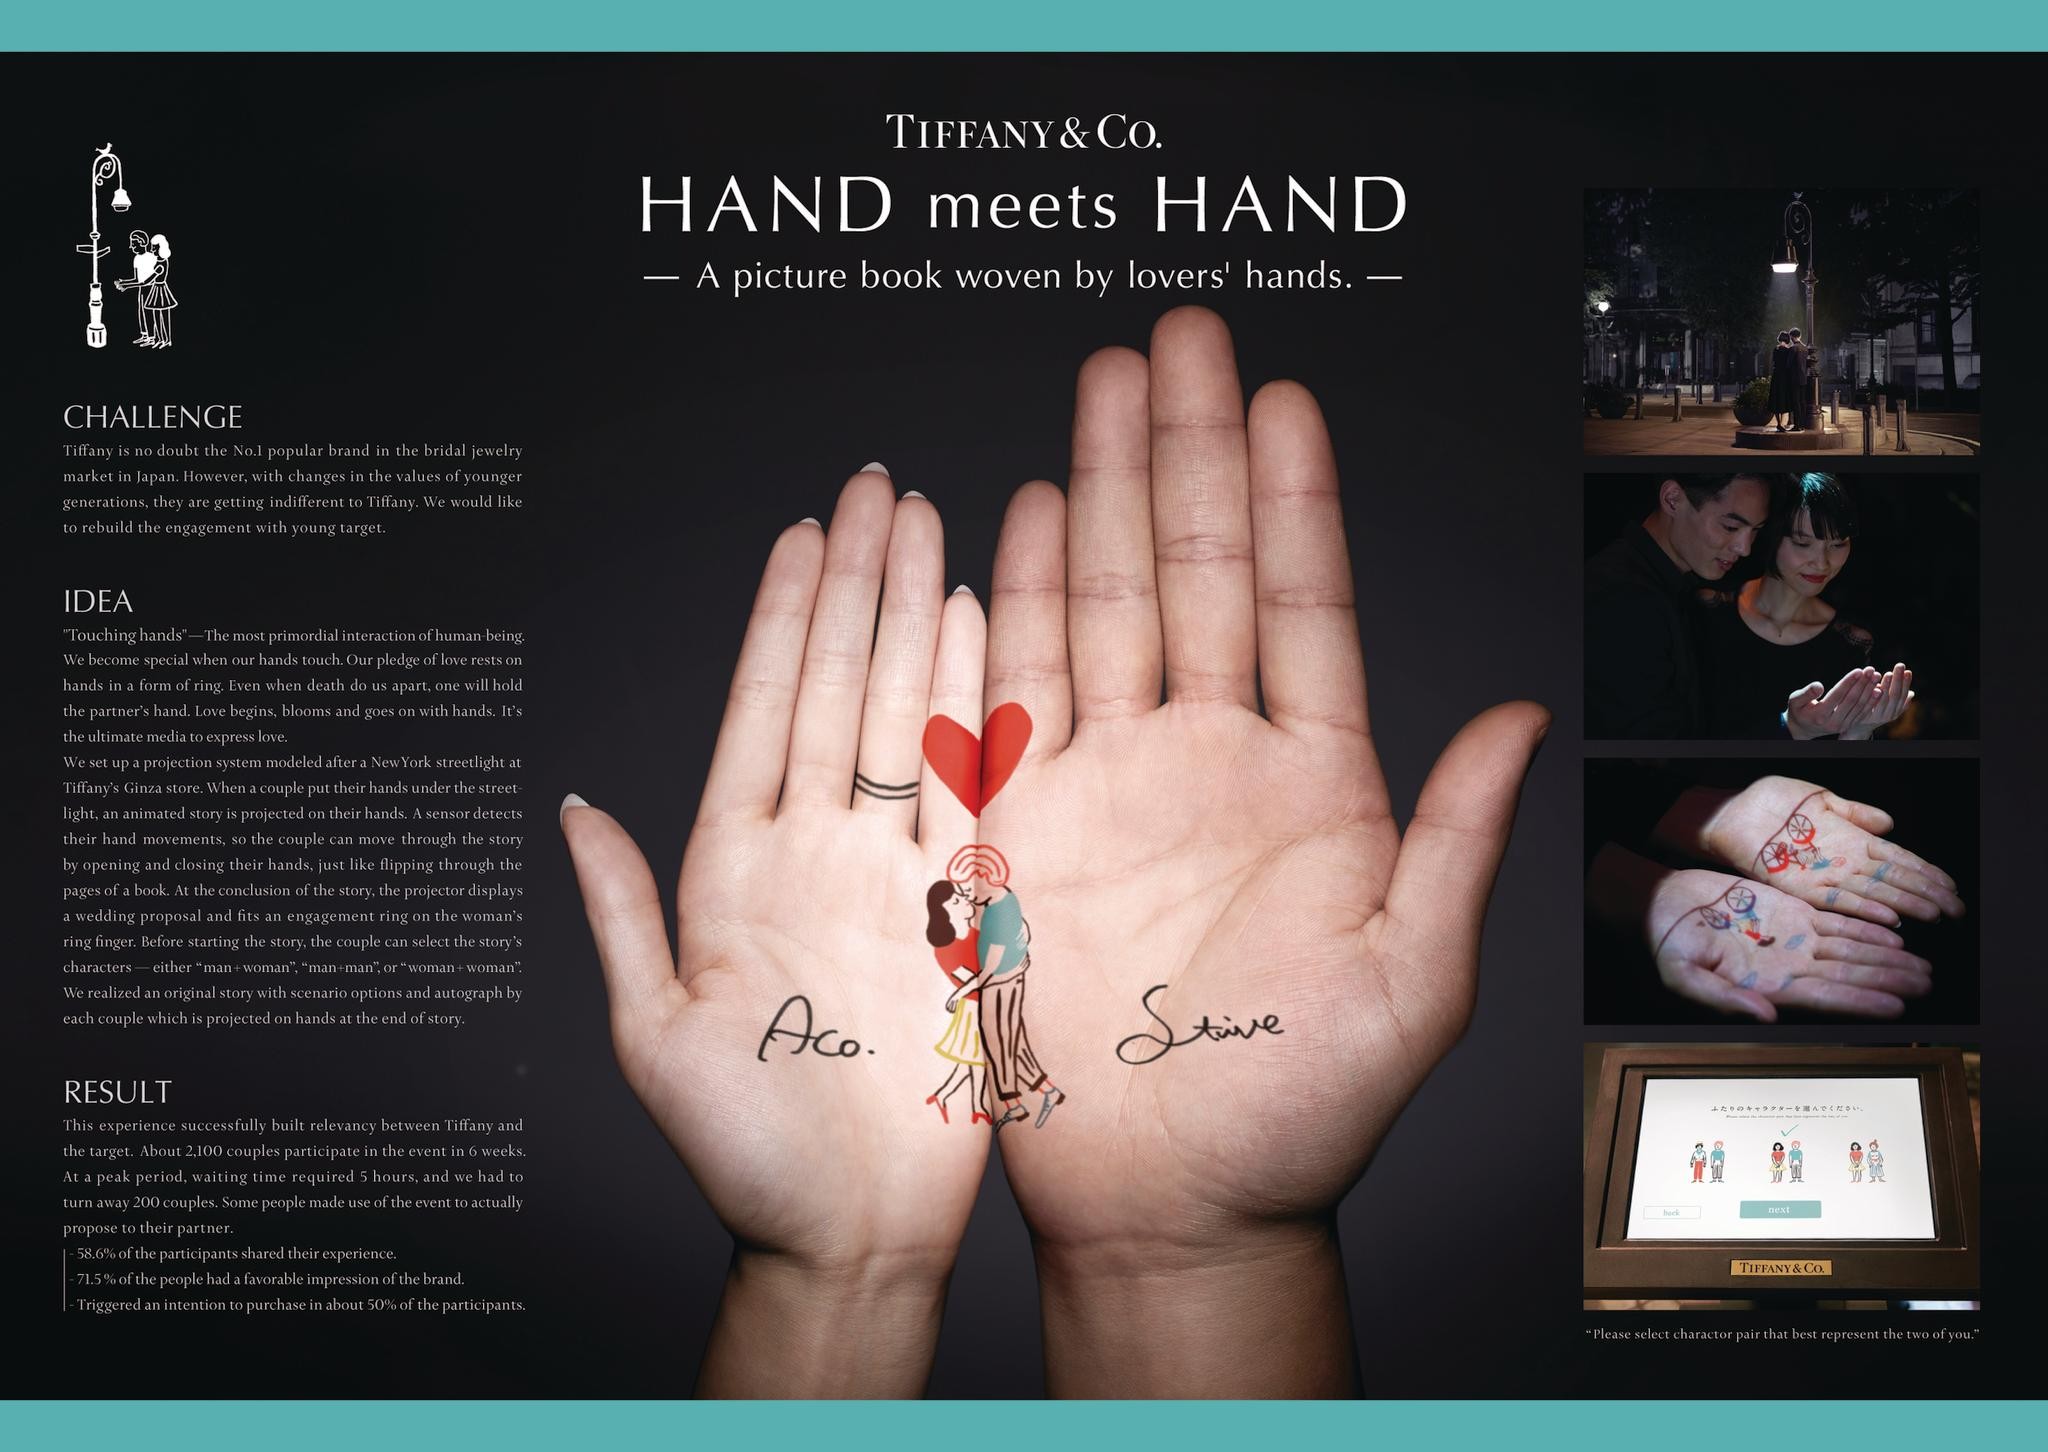 HAND MEETS HAND